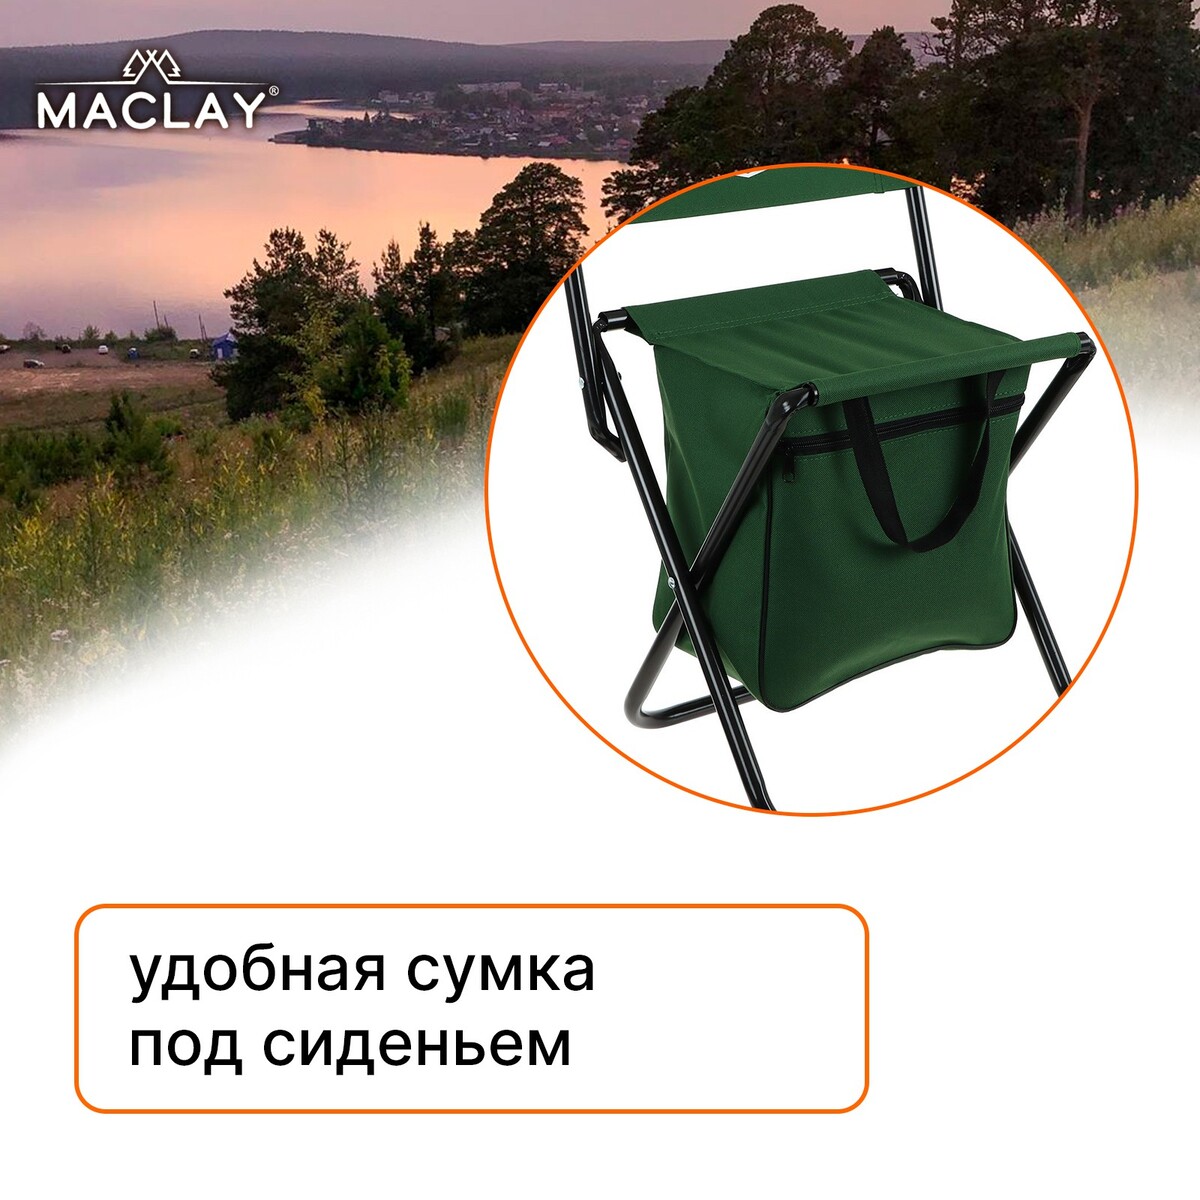 Стул туристический с сумкой, до 60 кг, размер 24 х 26 х 60 см, цвет зелёный Maclay 02643748 - фото 2